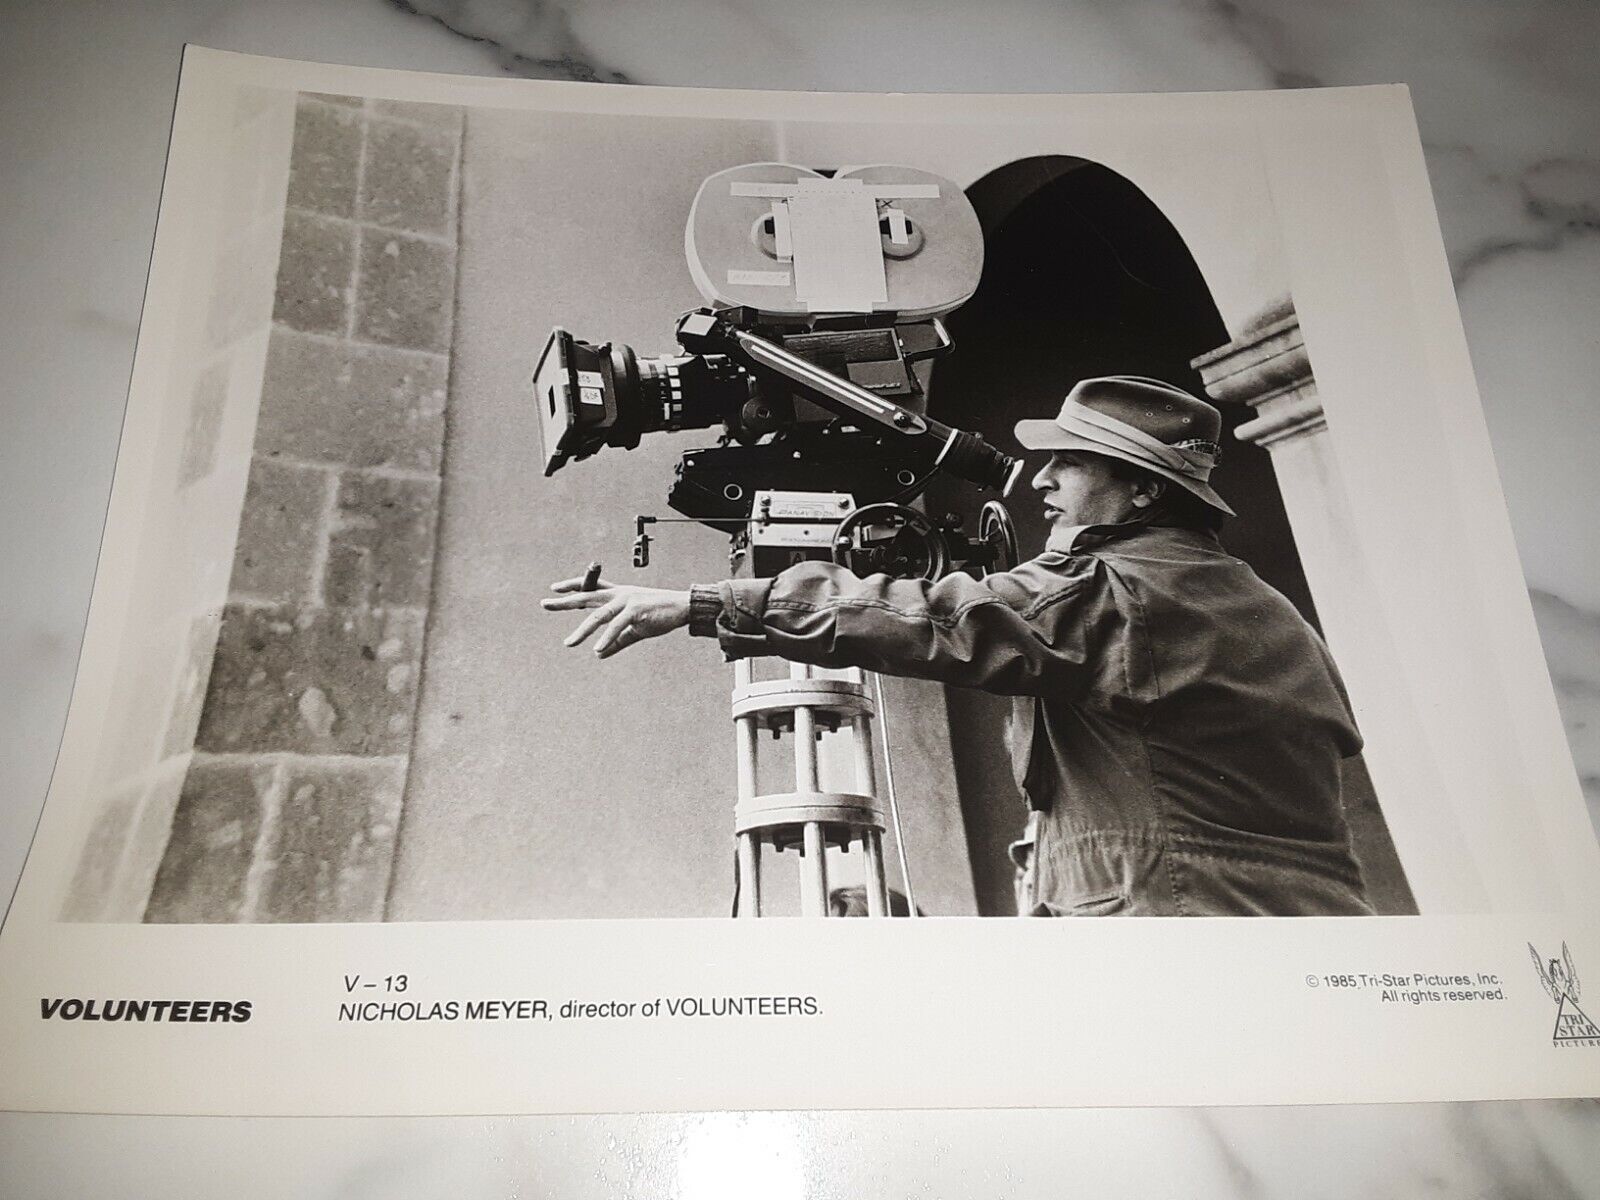 1985 Press Photo Nicholas Meyer, director of VOLUNTEERS. -🔥🔥 cb4